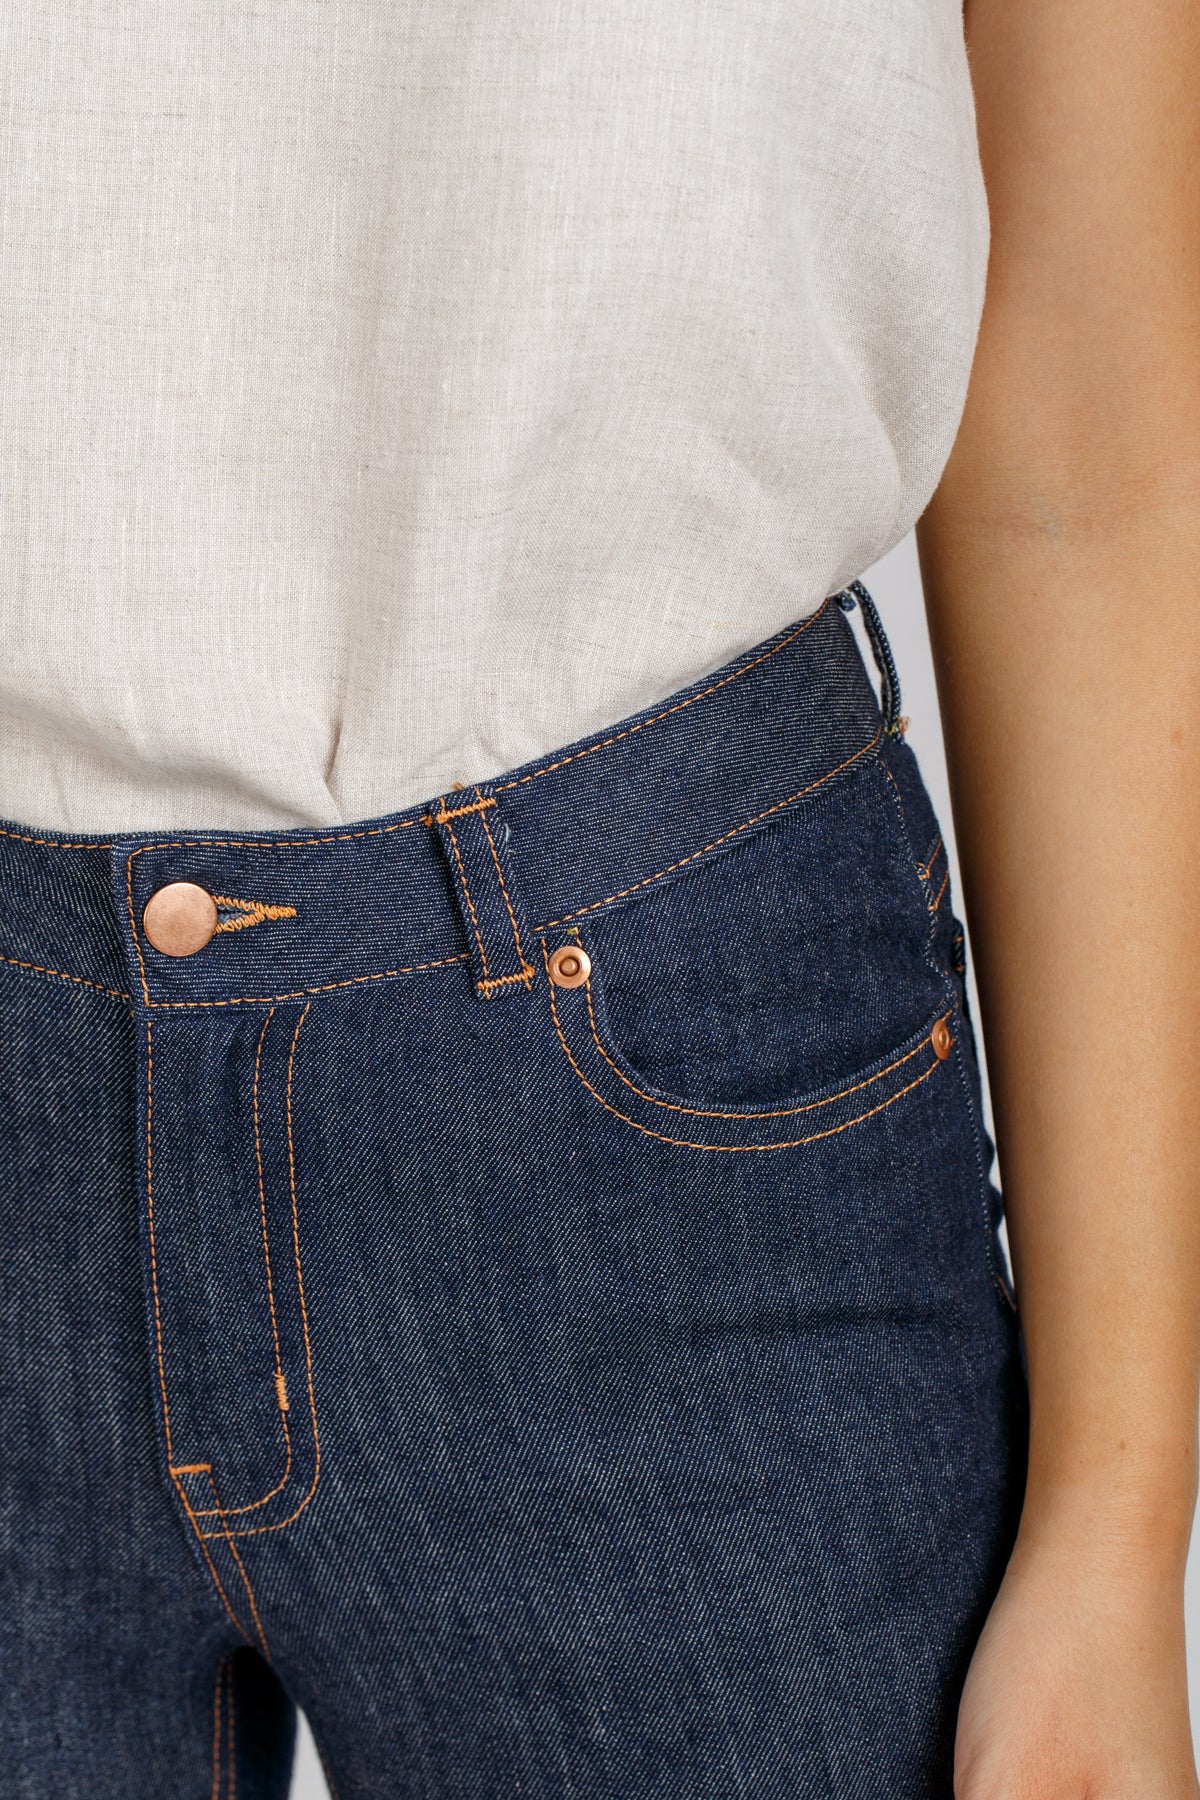 Ash Jeans (4 in 1!) Sewing Pattern | Megan Nielsen Patterns